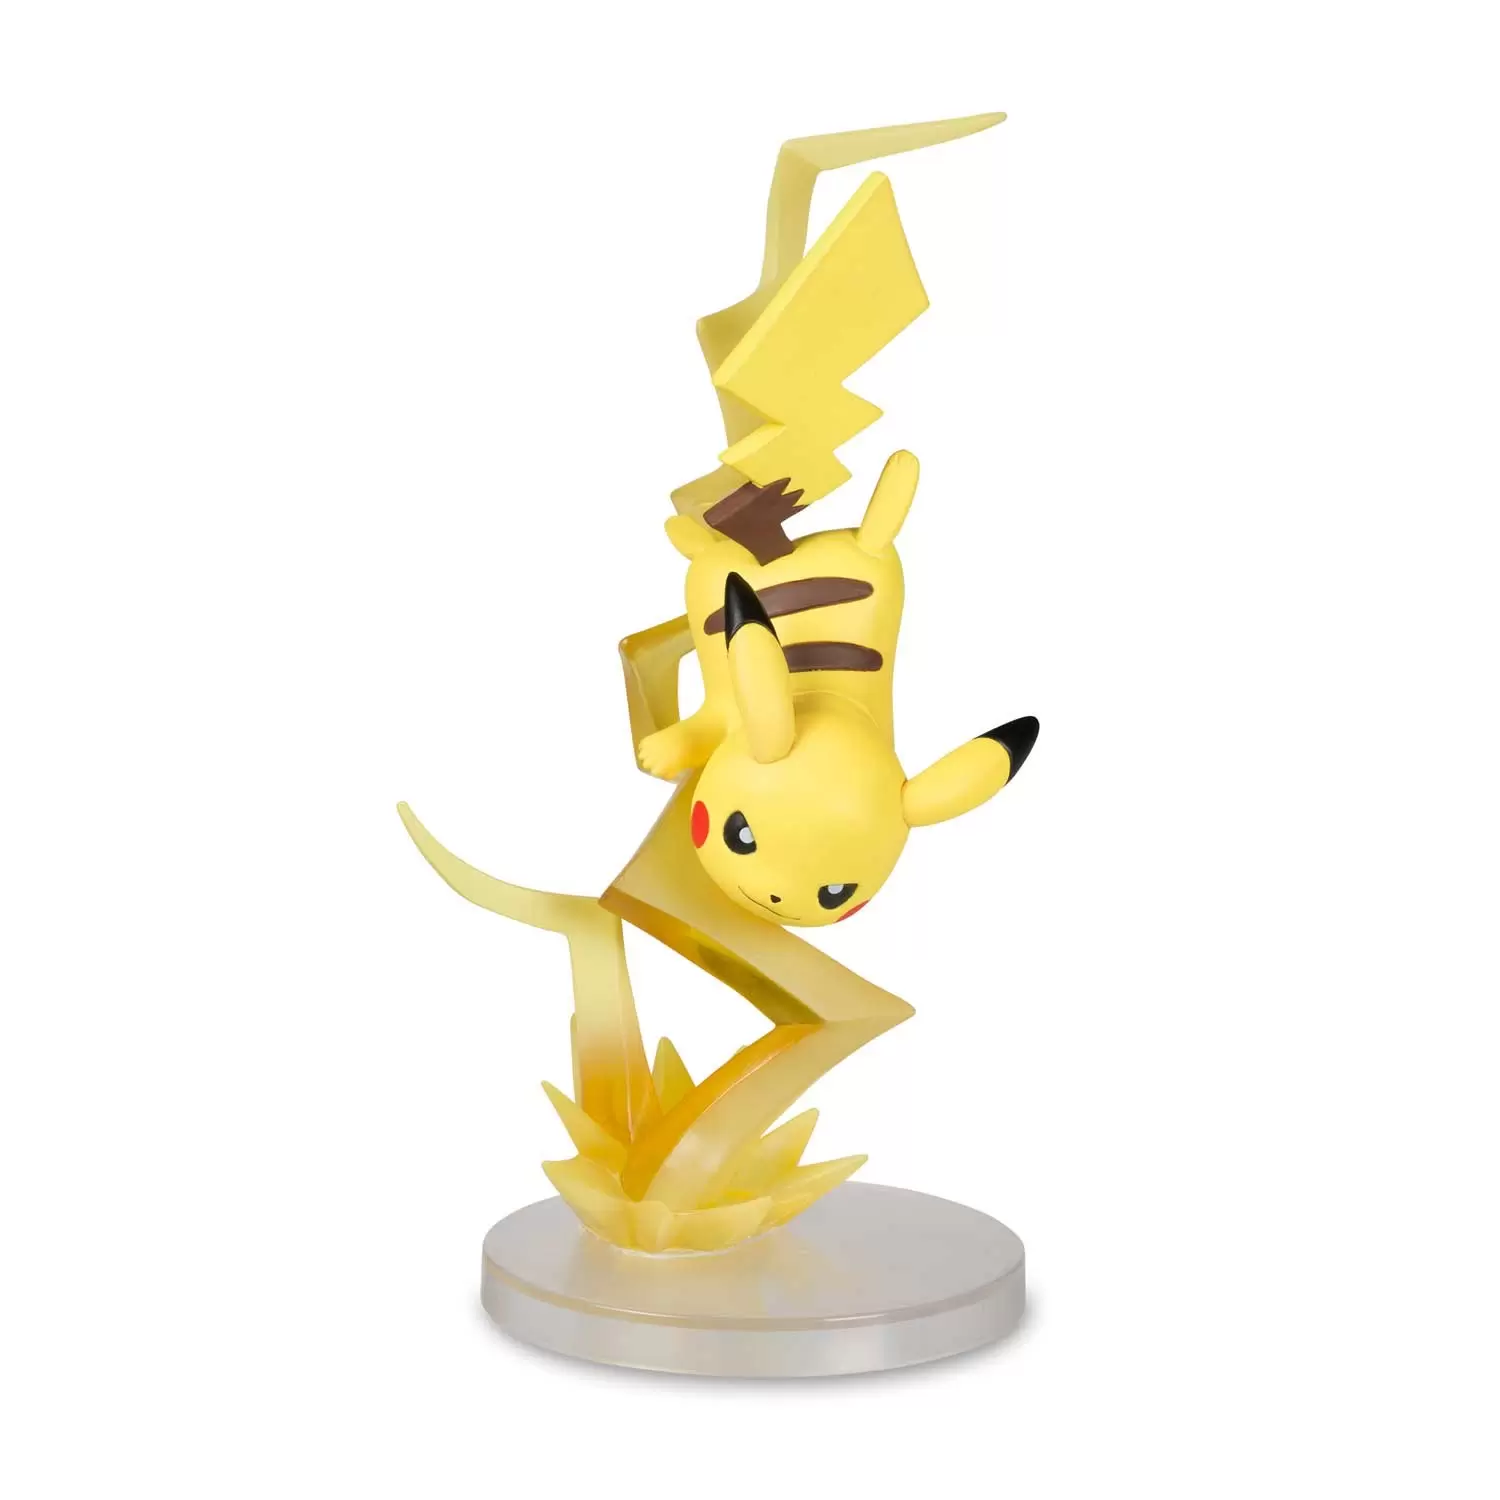 Pokémon Gallery Figures - Pikachu: Thunderbolt